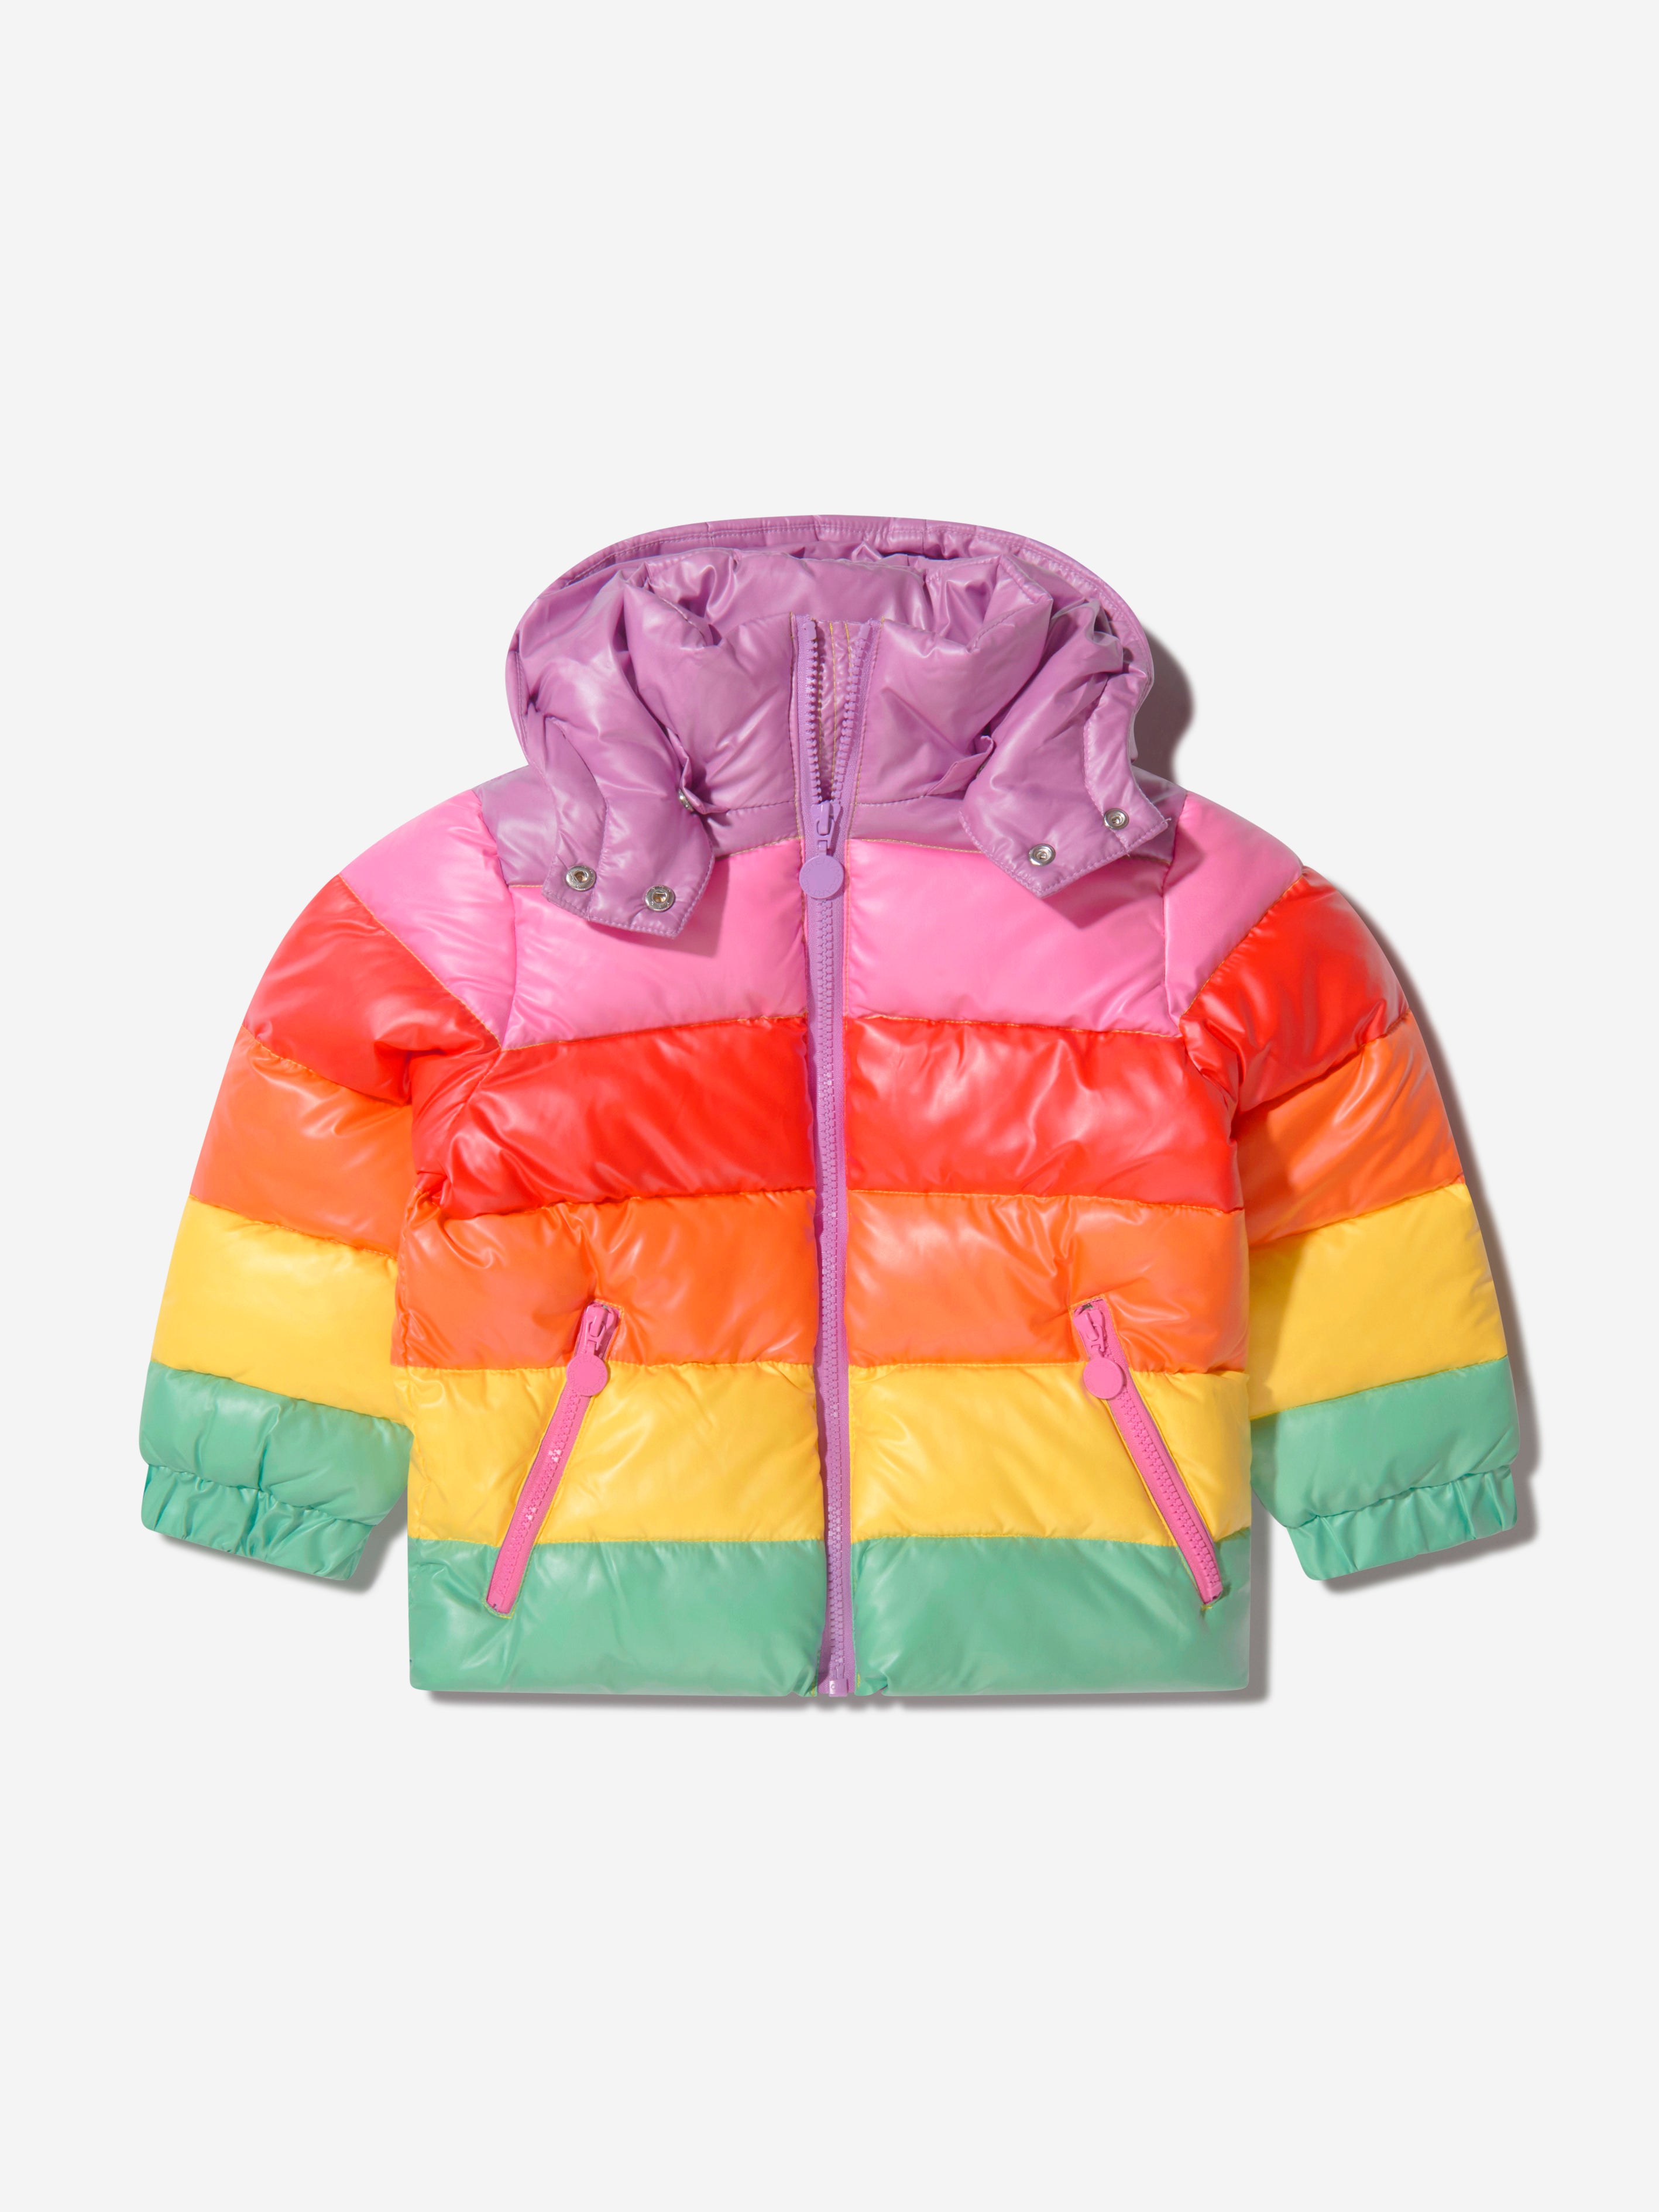 Stella McCartney Kids Girls Rainbow Puffer Coat | Childsplay Clothing